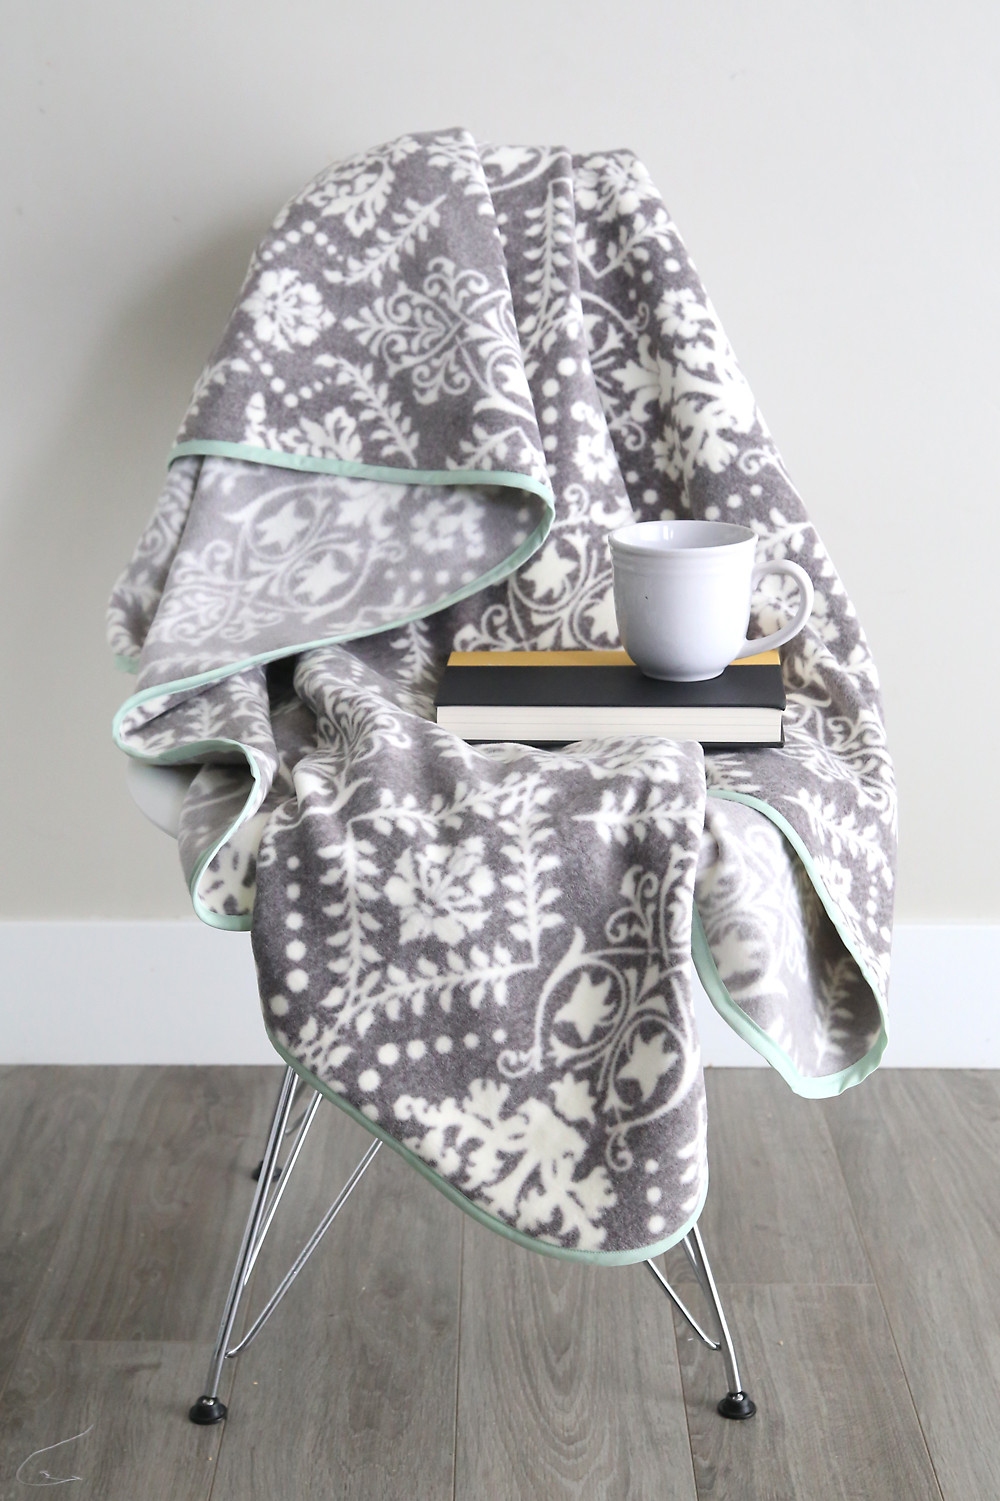 Best ideas about Fleece Blankets DIY
. Save or Pin easy & beautiful DIY fleece blankets It s Always Autumn Now.